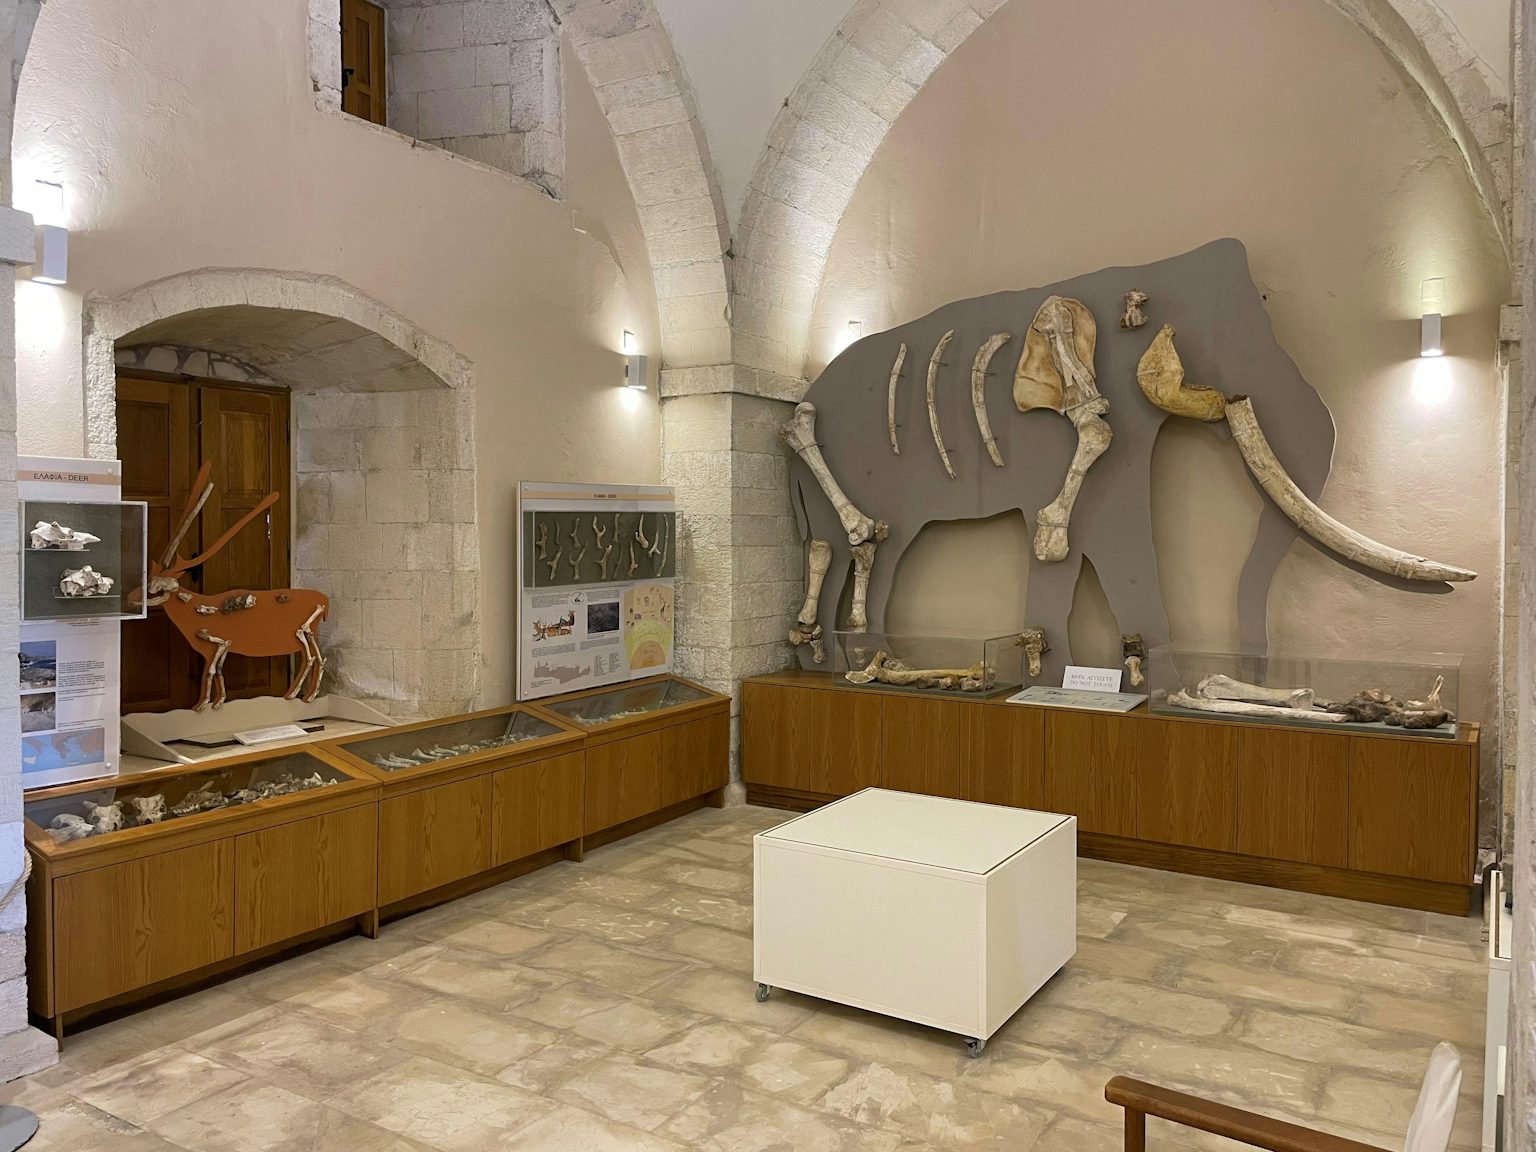 Rethymno' s Paleontological Museum